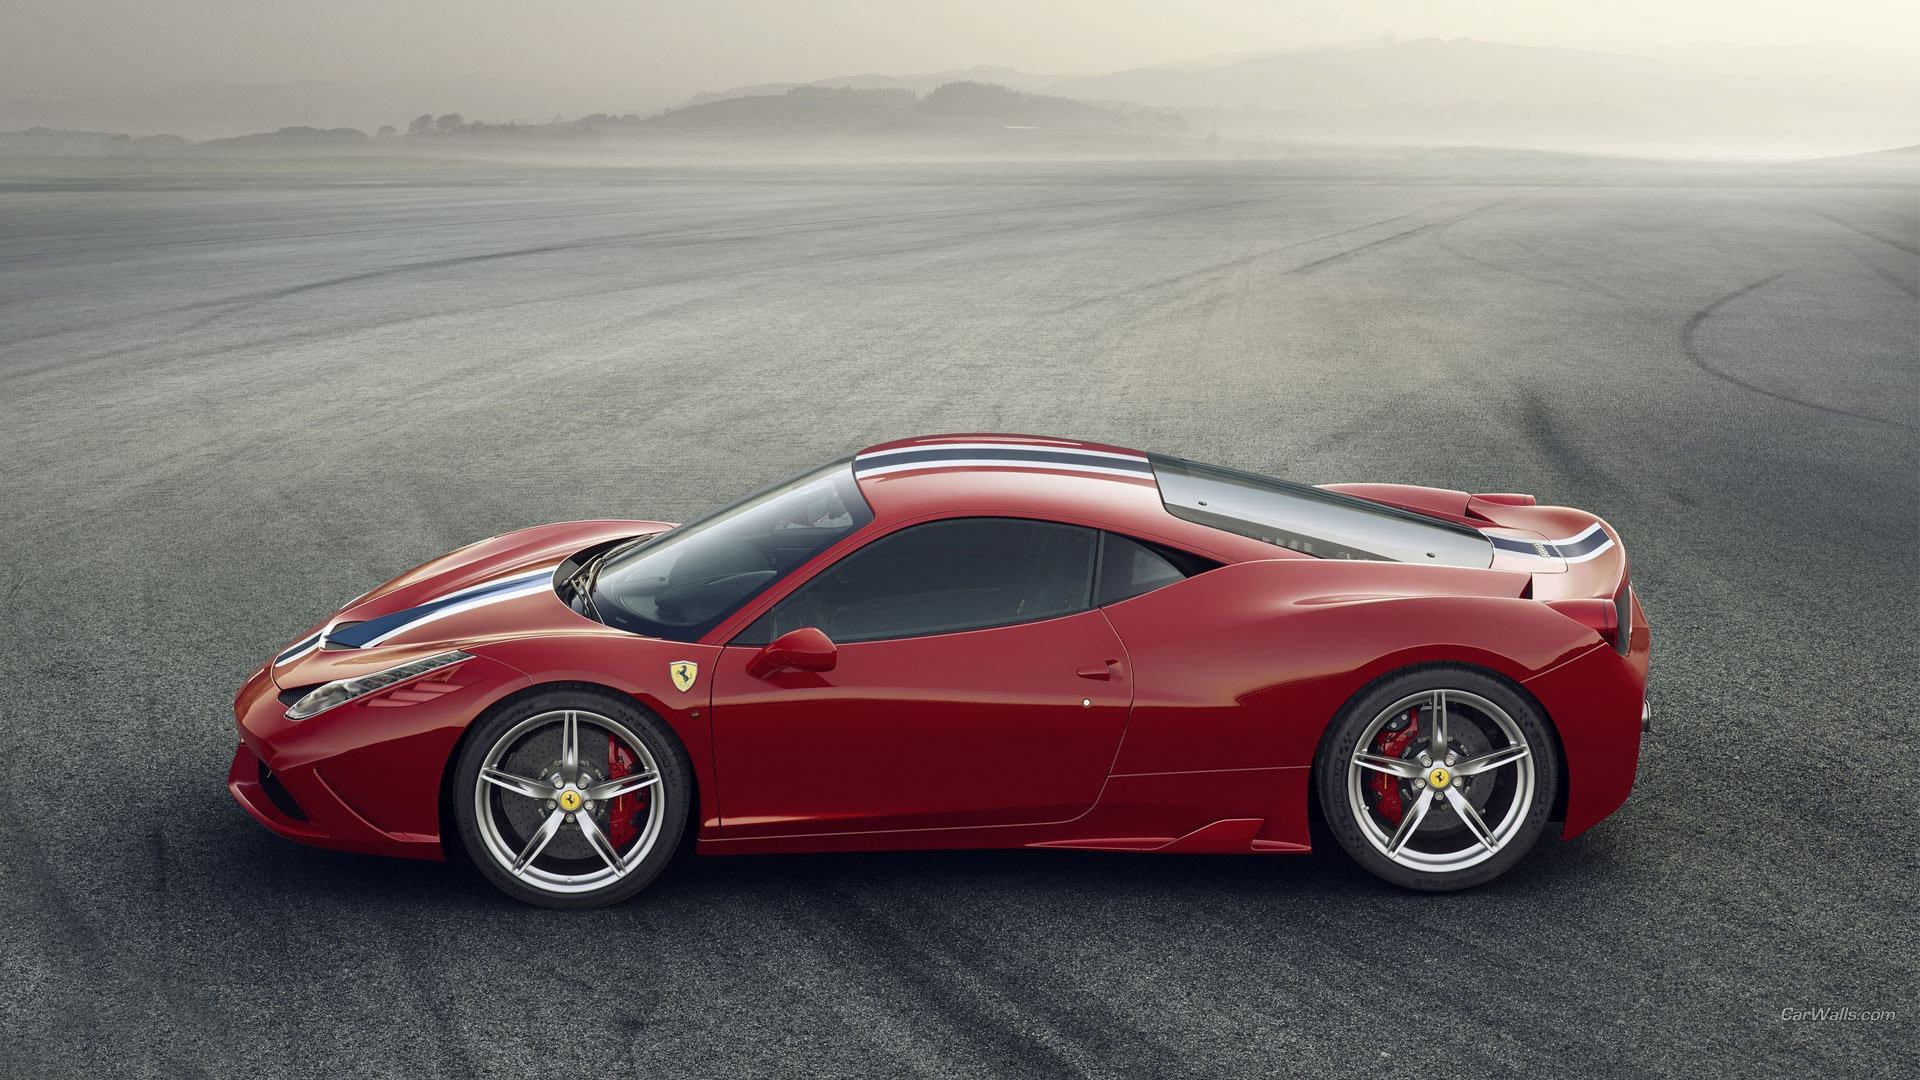 Free download Ferrari 458 Speciale wallpaper ID:218902 1080p for desktop